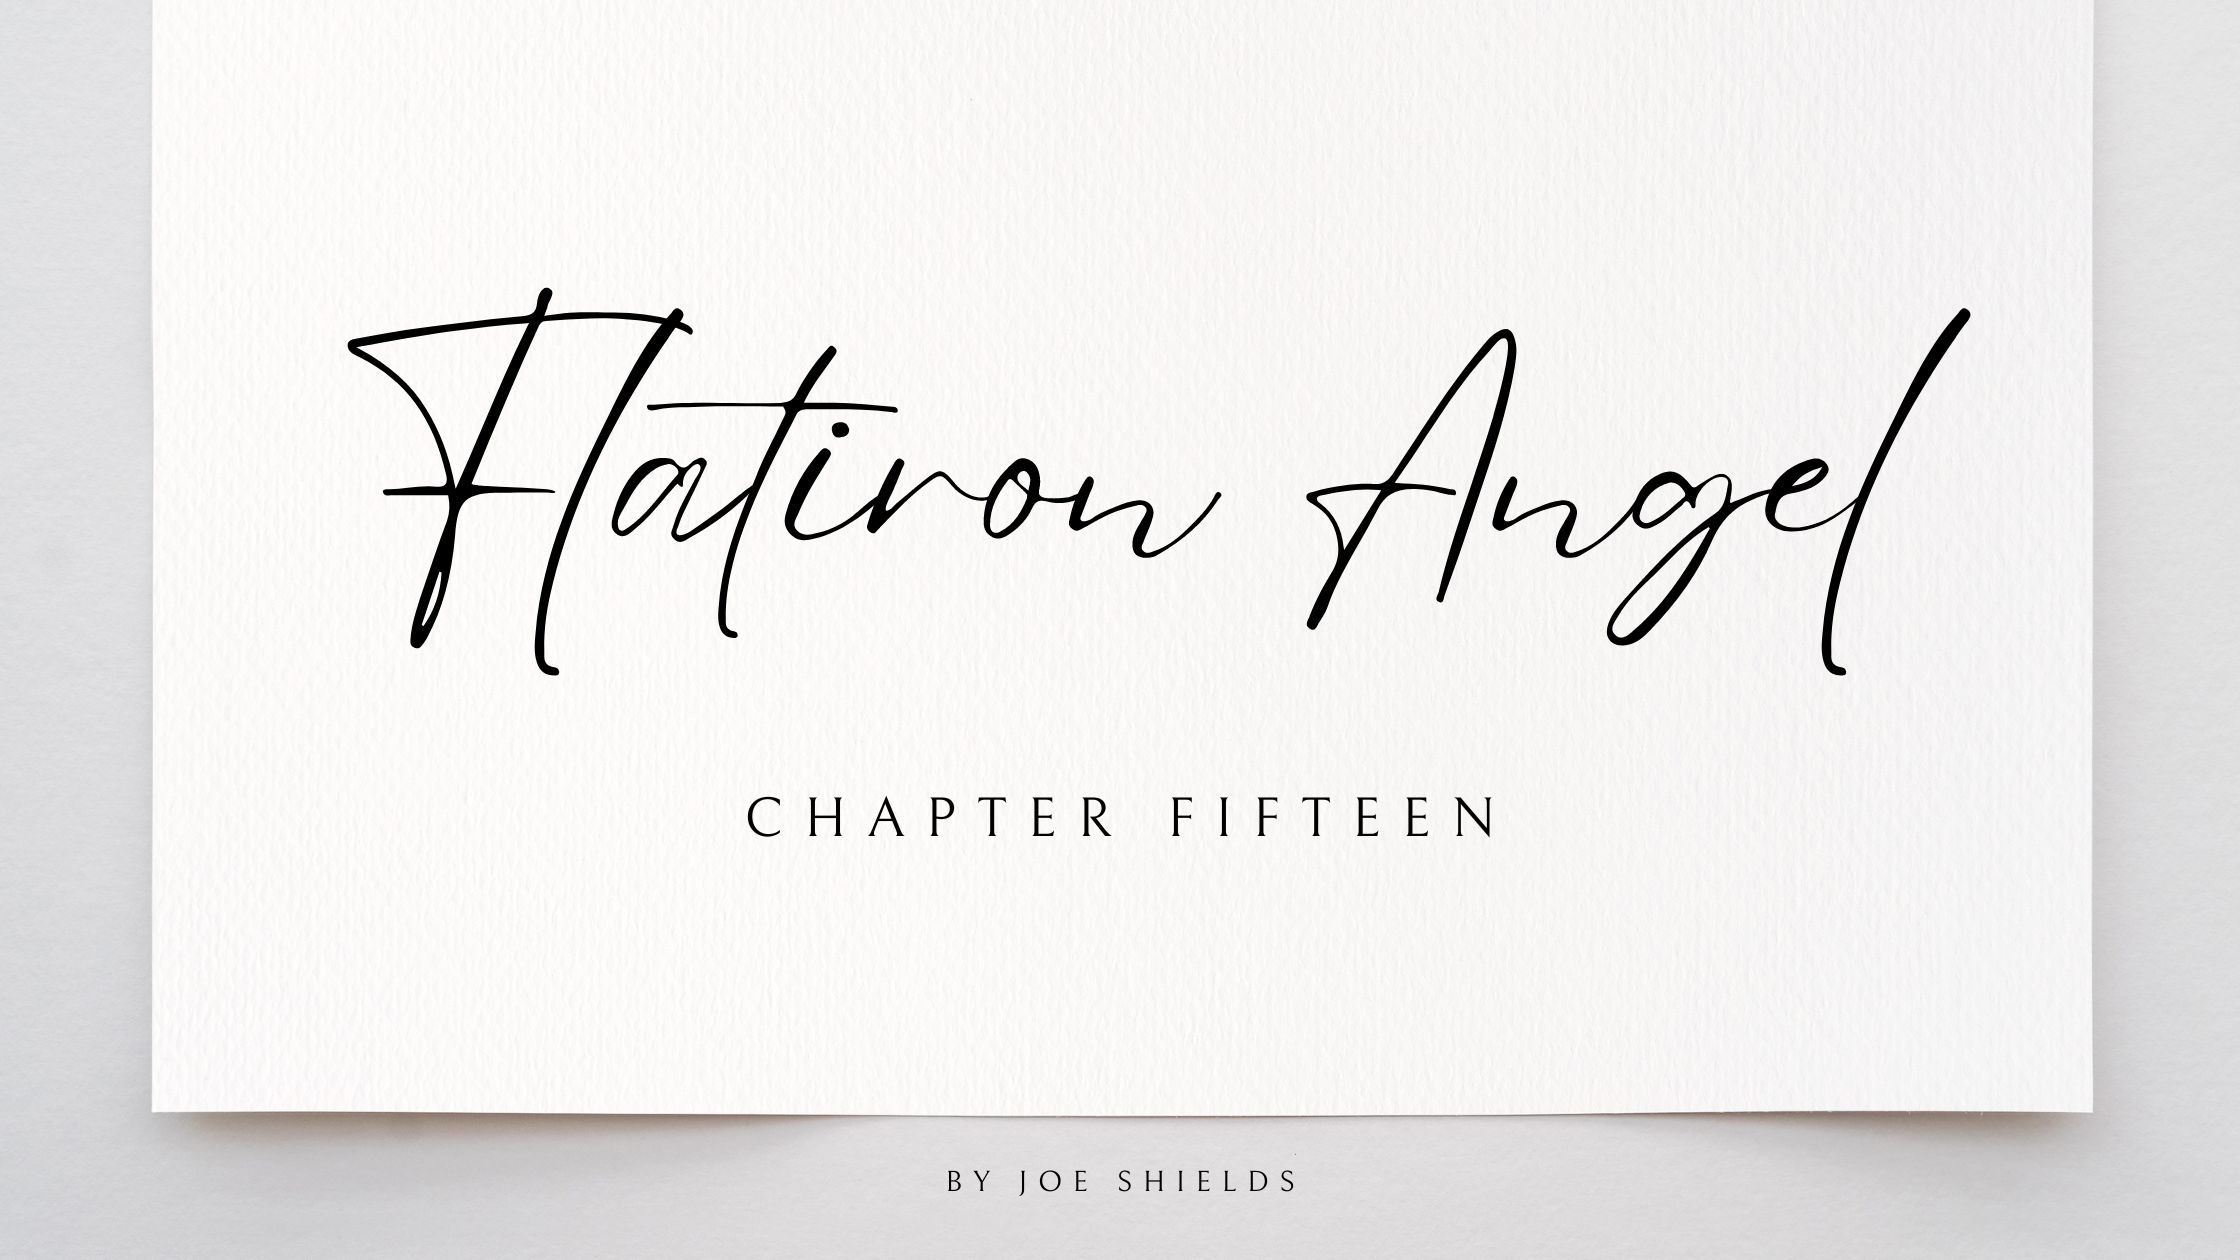 Flatiron-Angel-Chapter-Fifteen-by-Joe-Shields